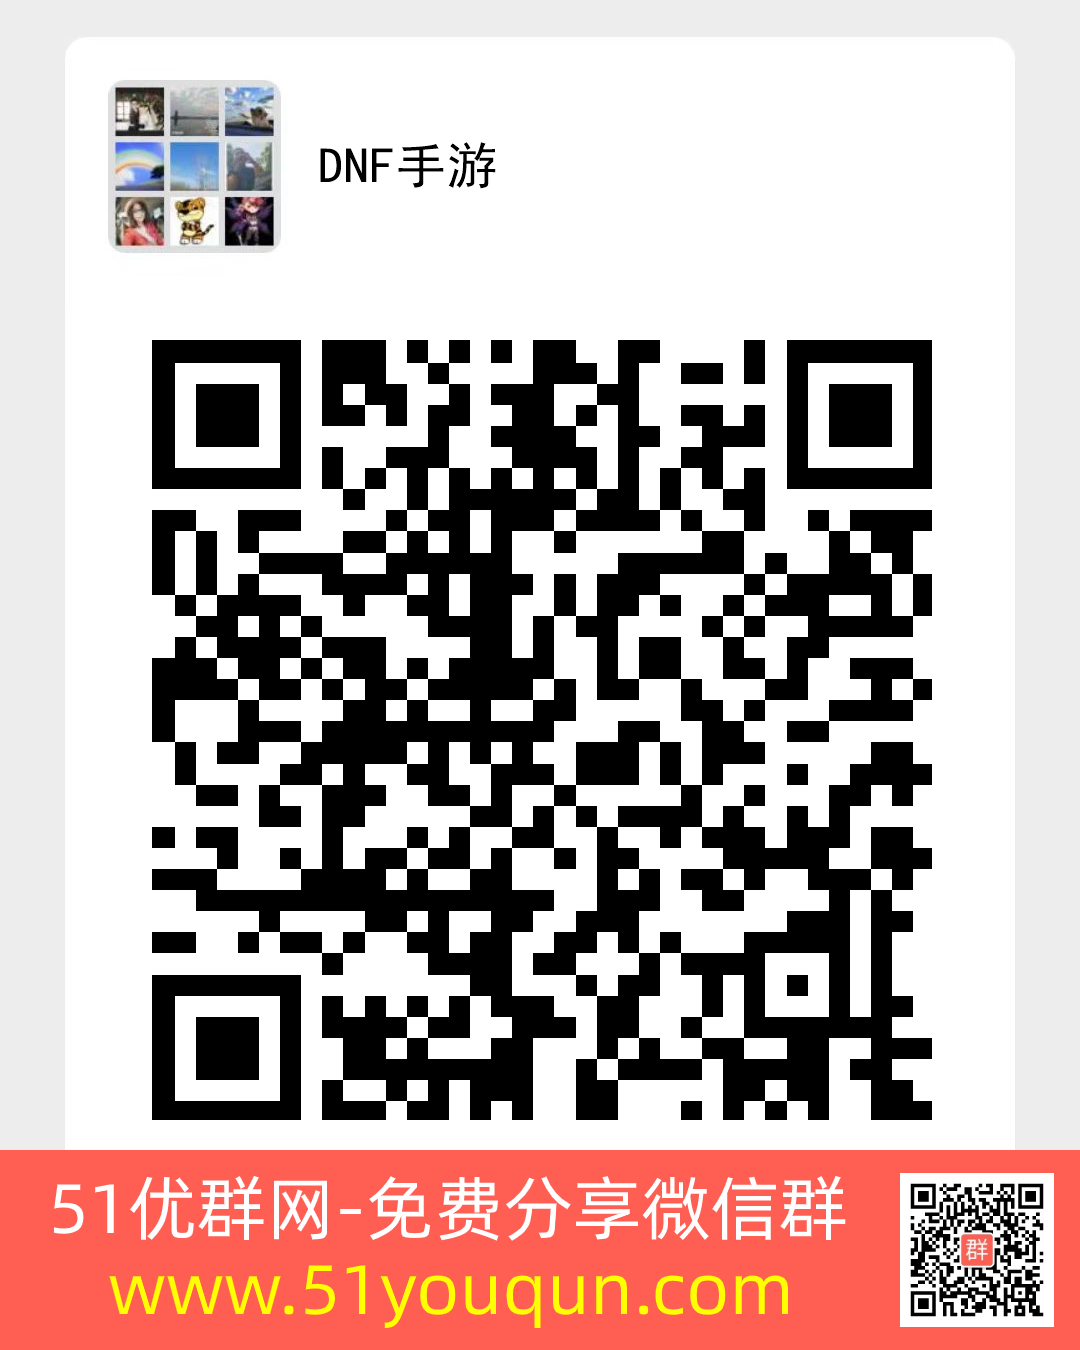 DNF手游-游戏·数码微信群